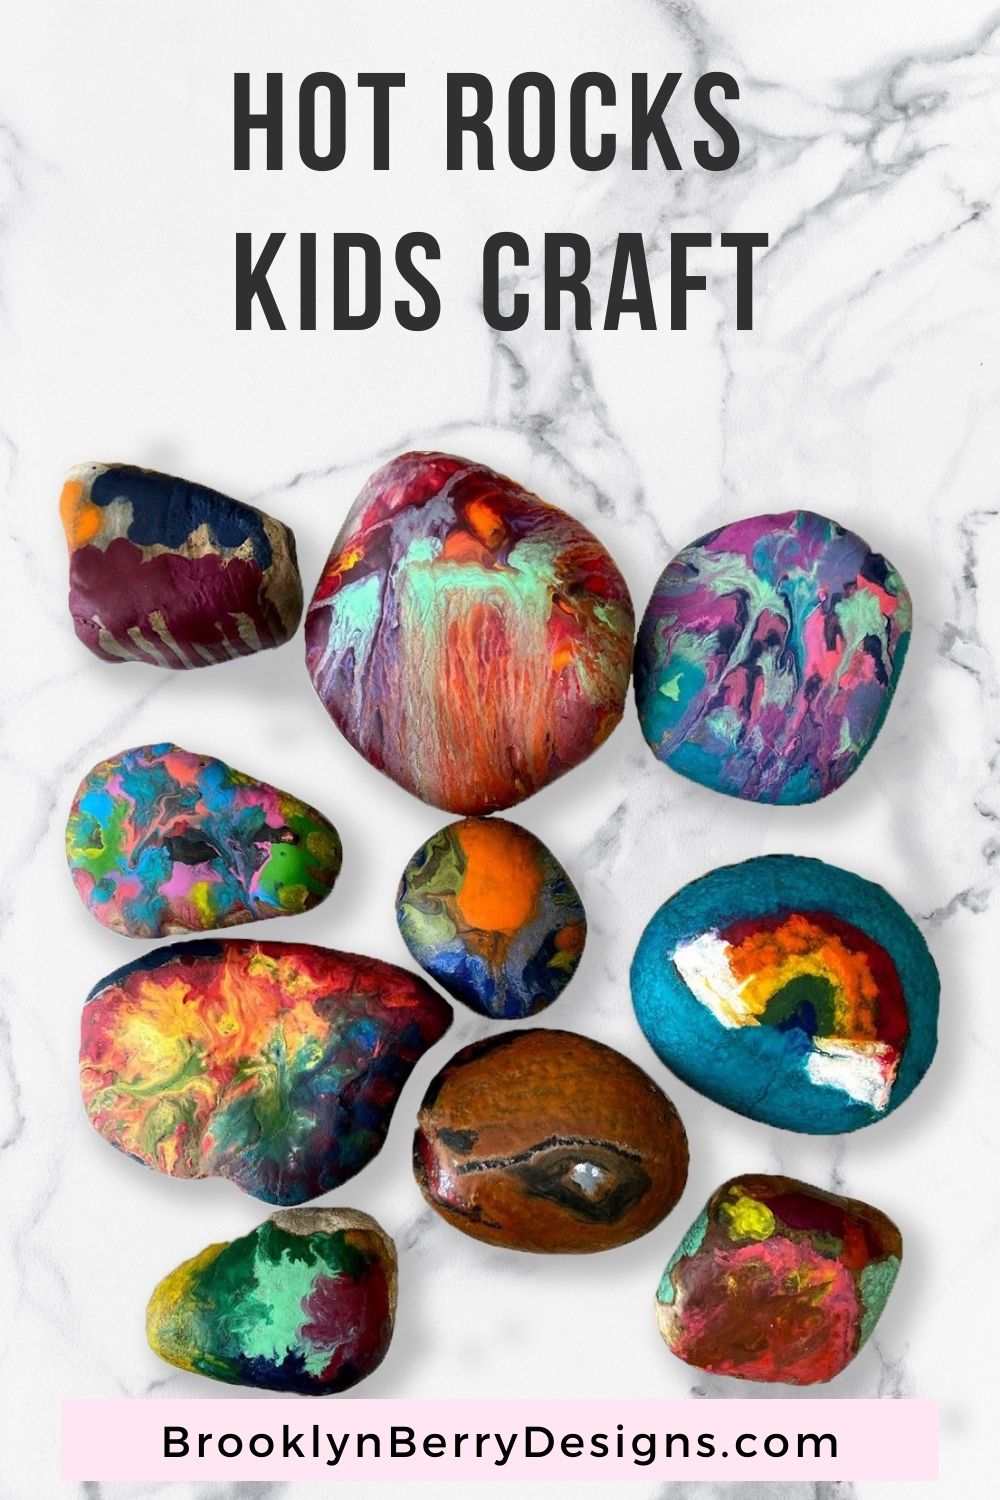 Hot Rocks Kids Craft via @brookeberry